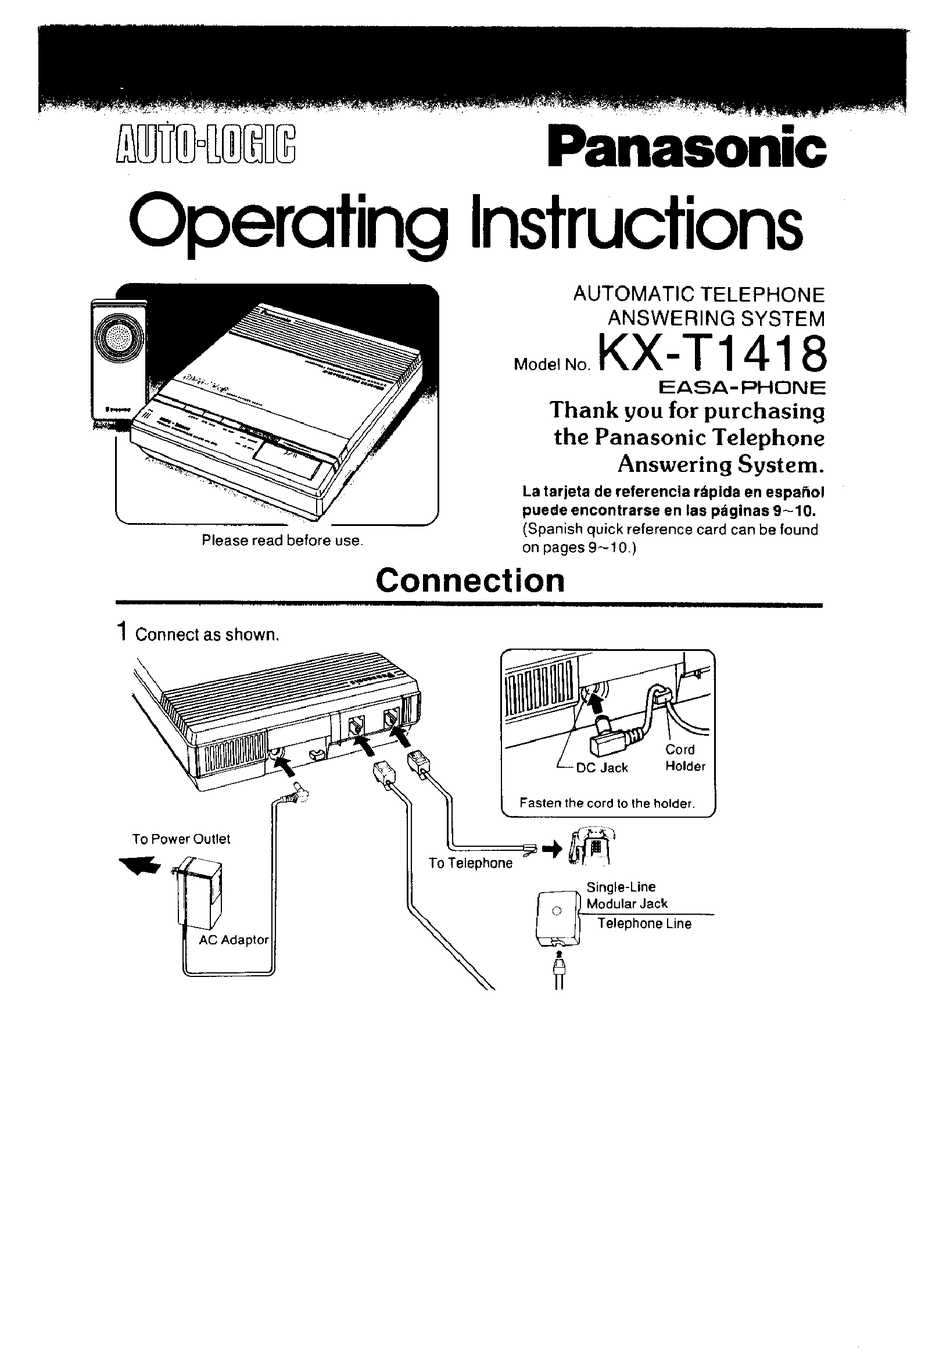 PANASONIC KX-T1418 OPERATING INSTRUCTIONS MANUAL Pdf Download | ManualsLib